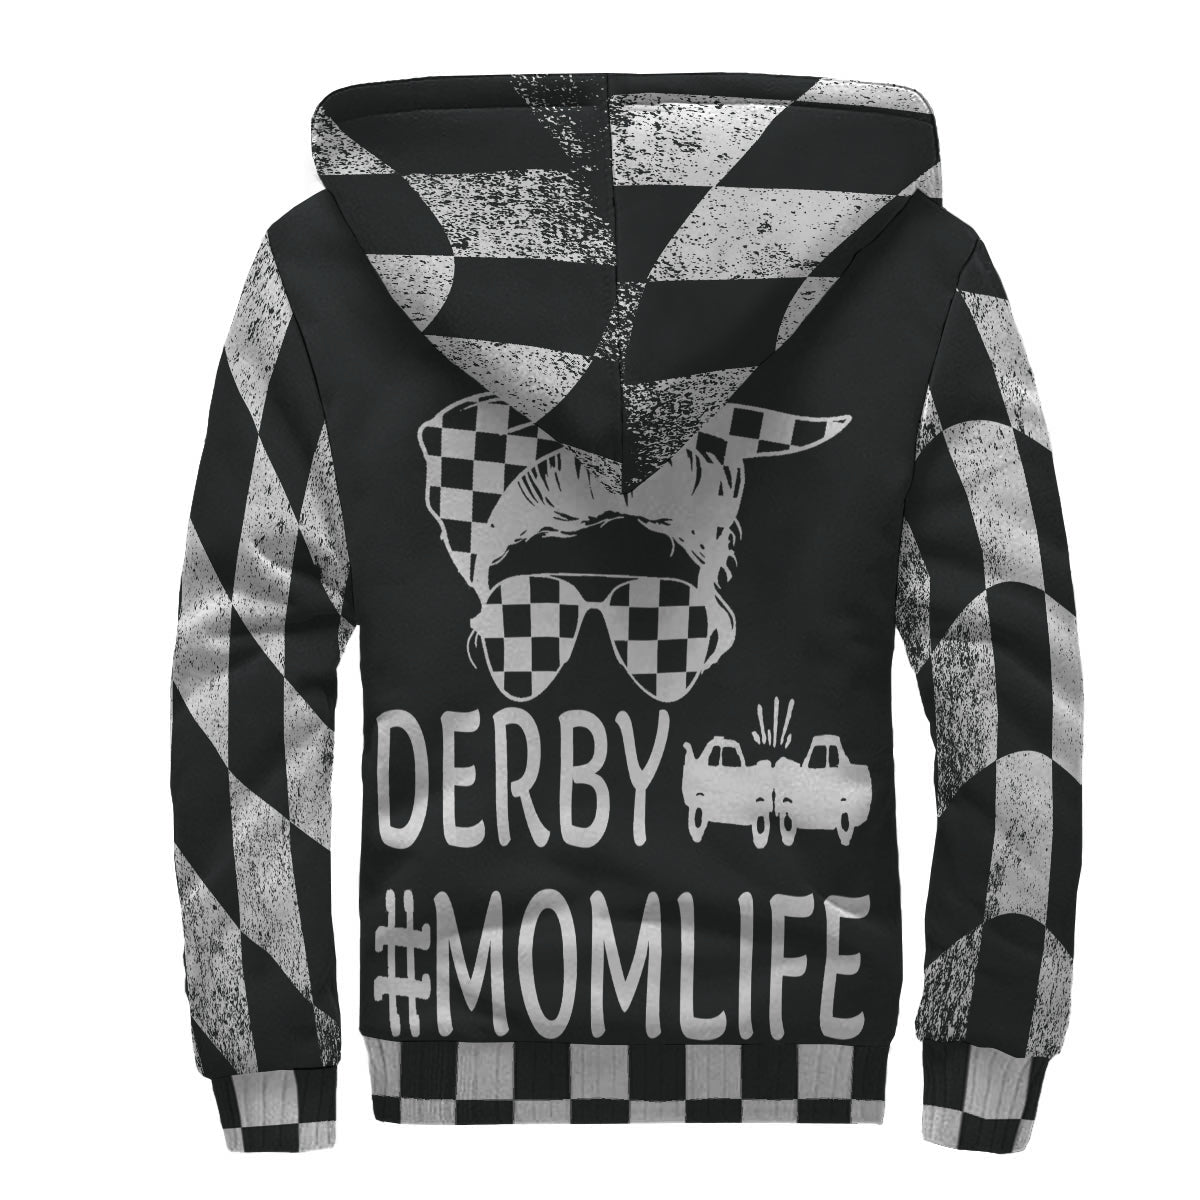 Demolition derby mom jacket